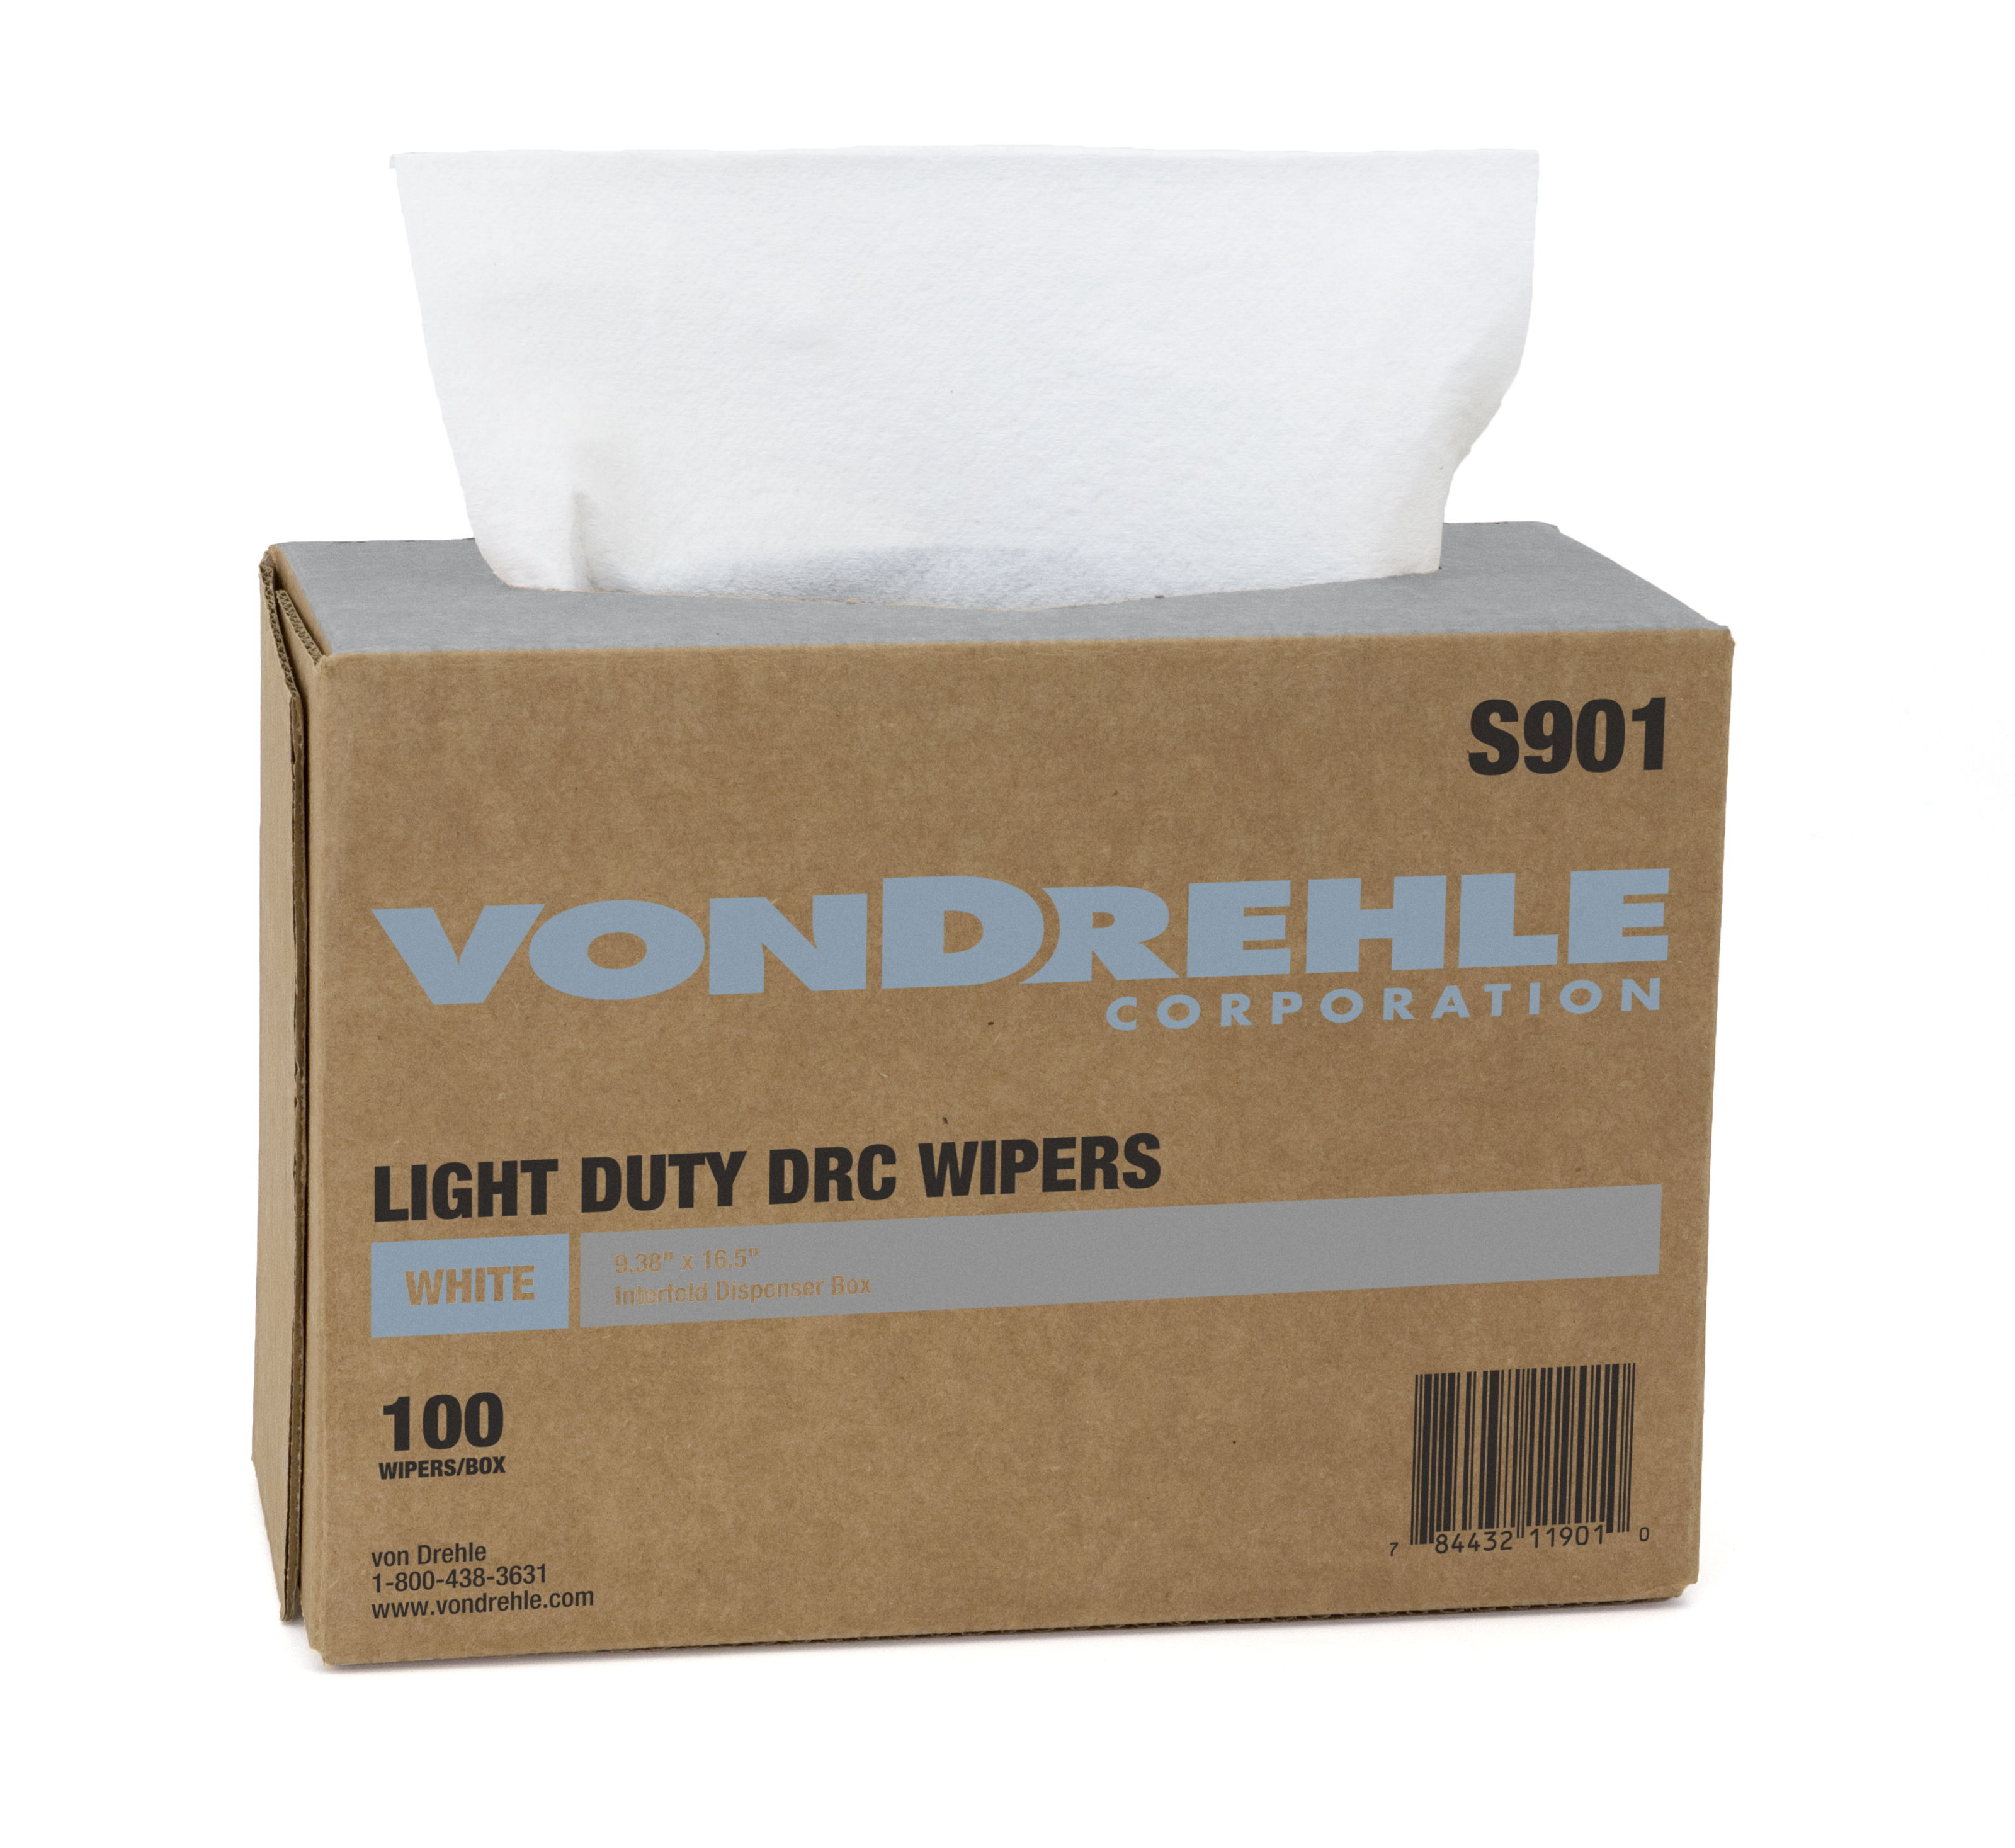 S901 DRC wiper pop-up box
white 9x16.5 9/100/cs